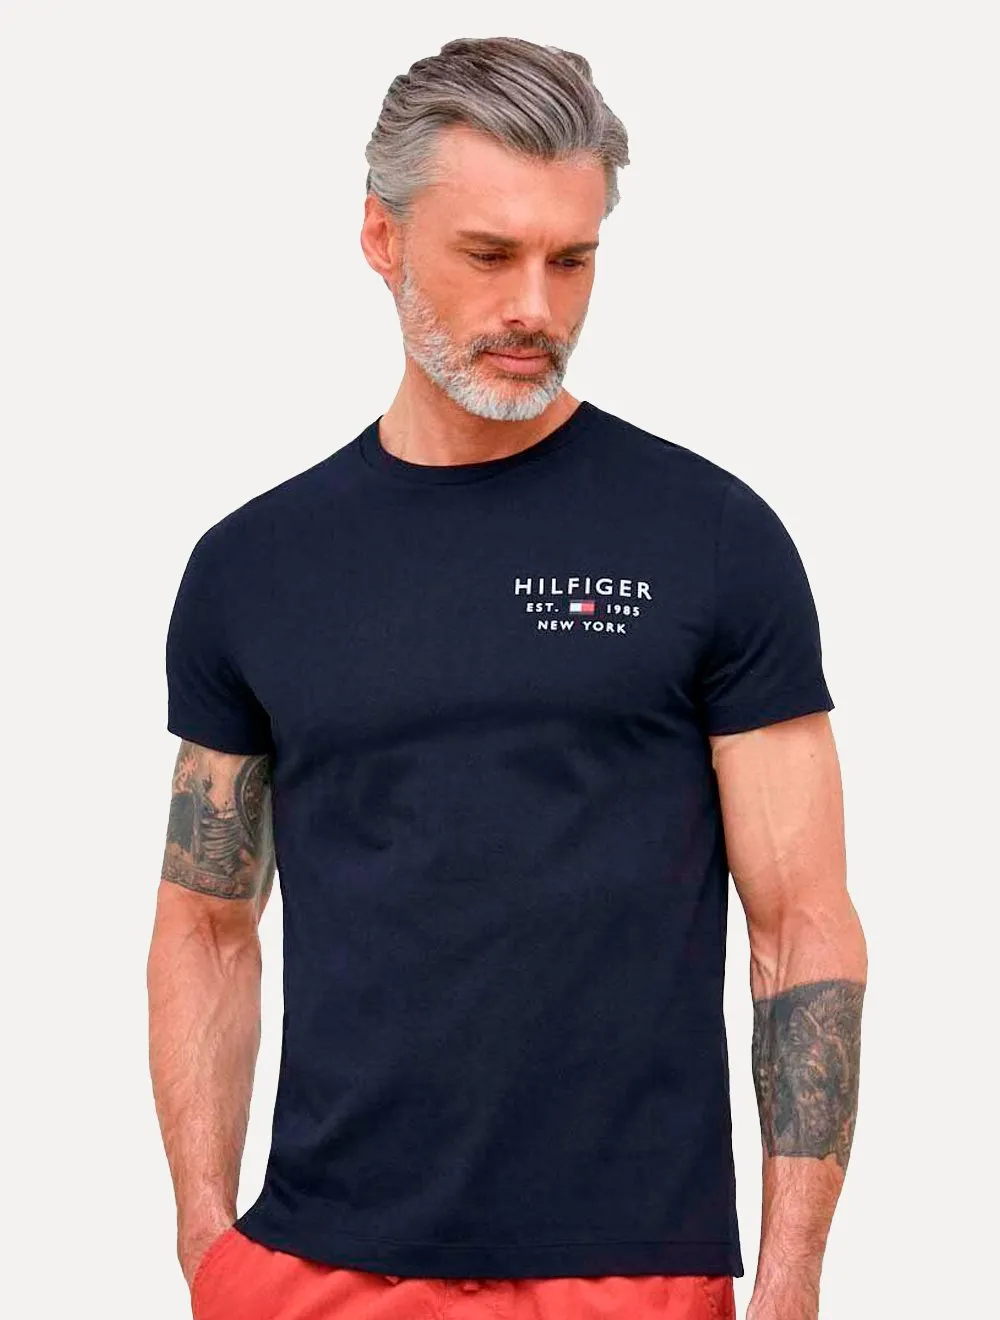 Camiseta Tommy Hilfiger Masculina Brand Love Small Logo Azul Marinho